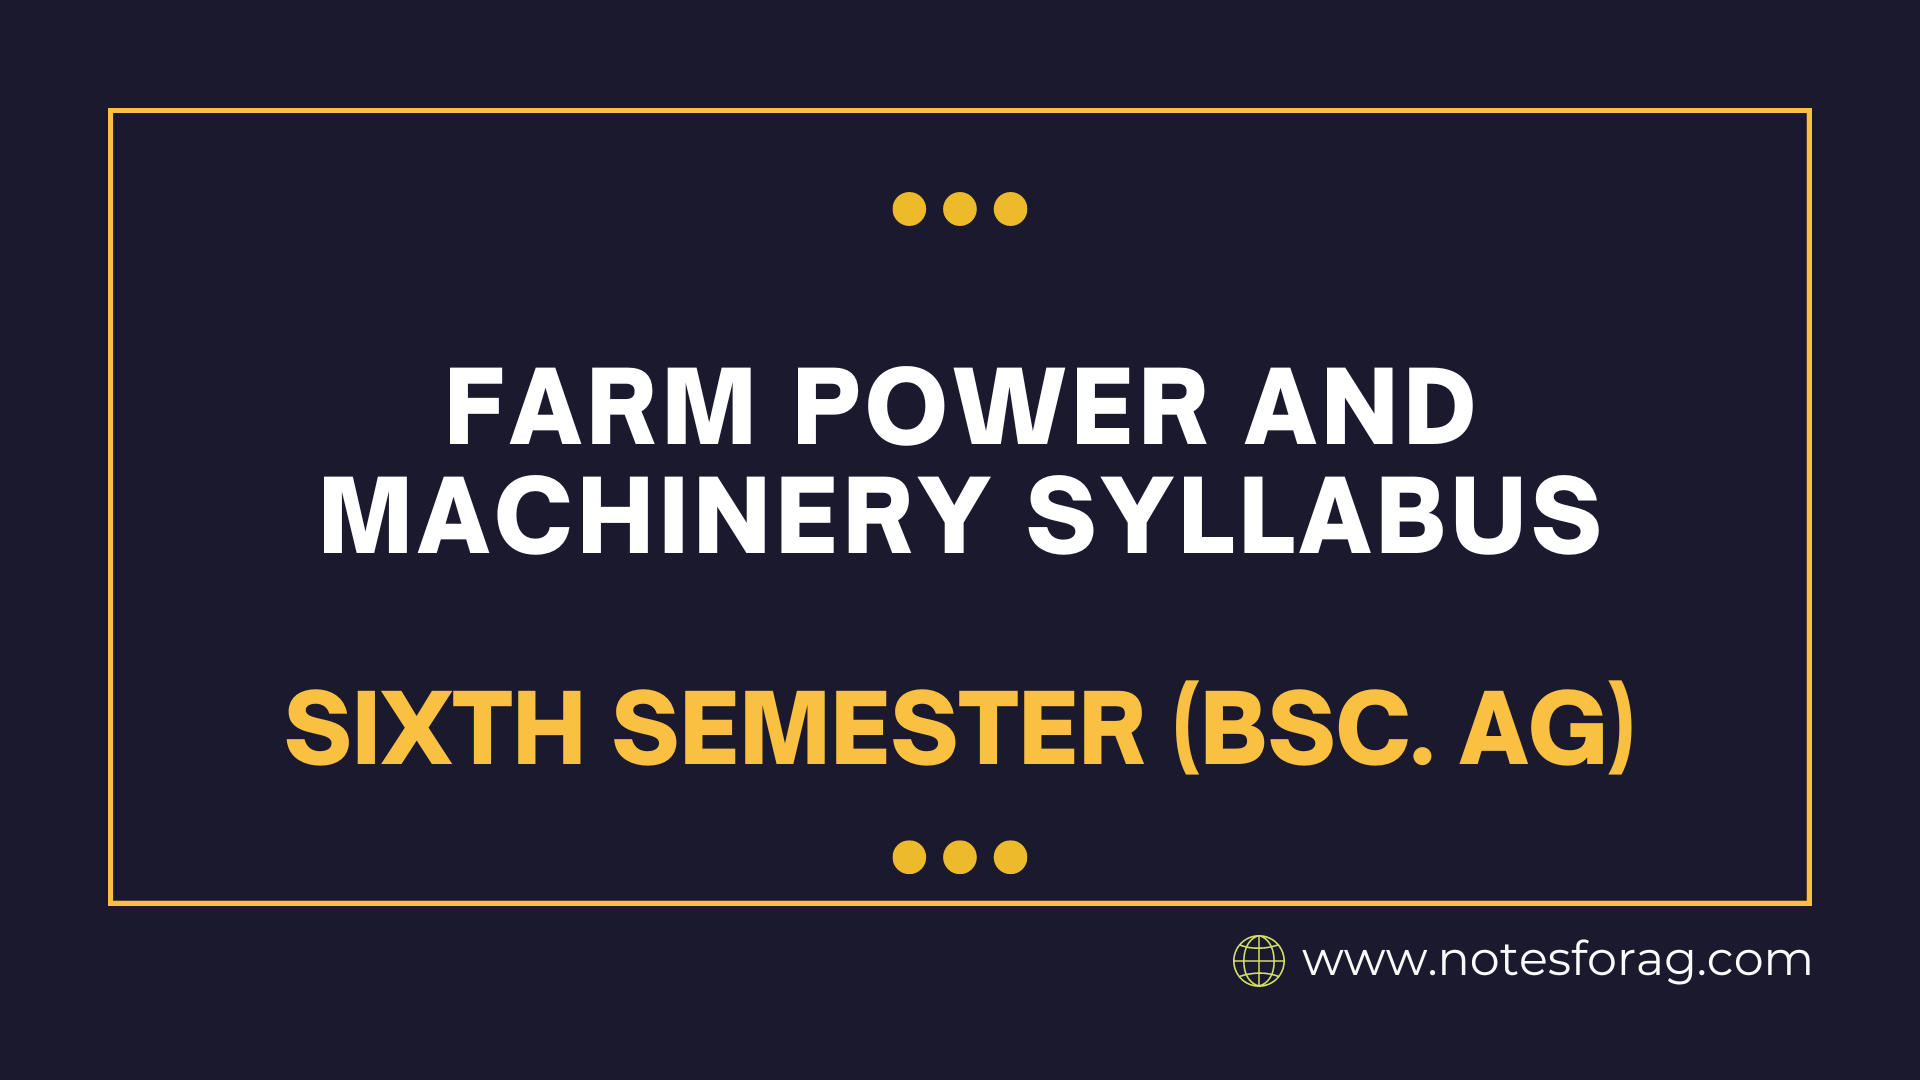 Farm Power and Machinery Syllabus – Sixth Semester (BSc. AG)